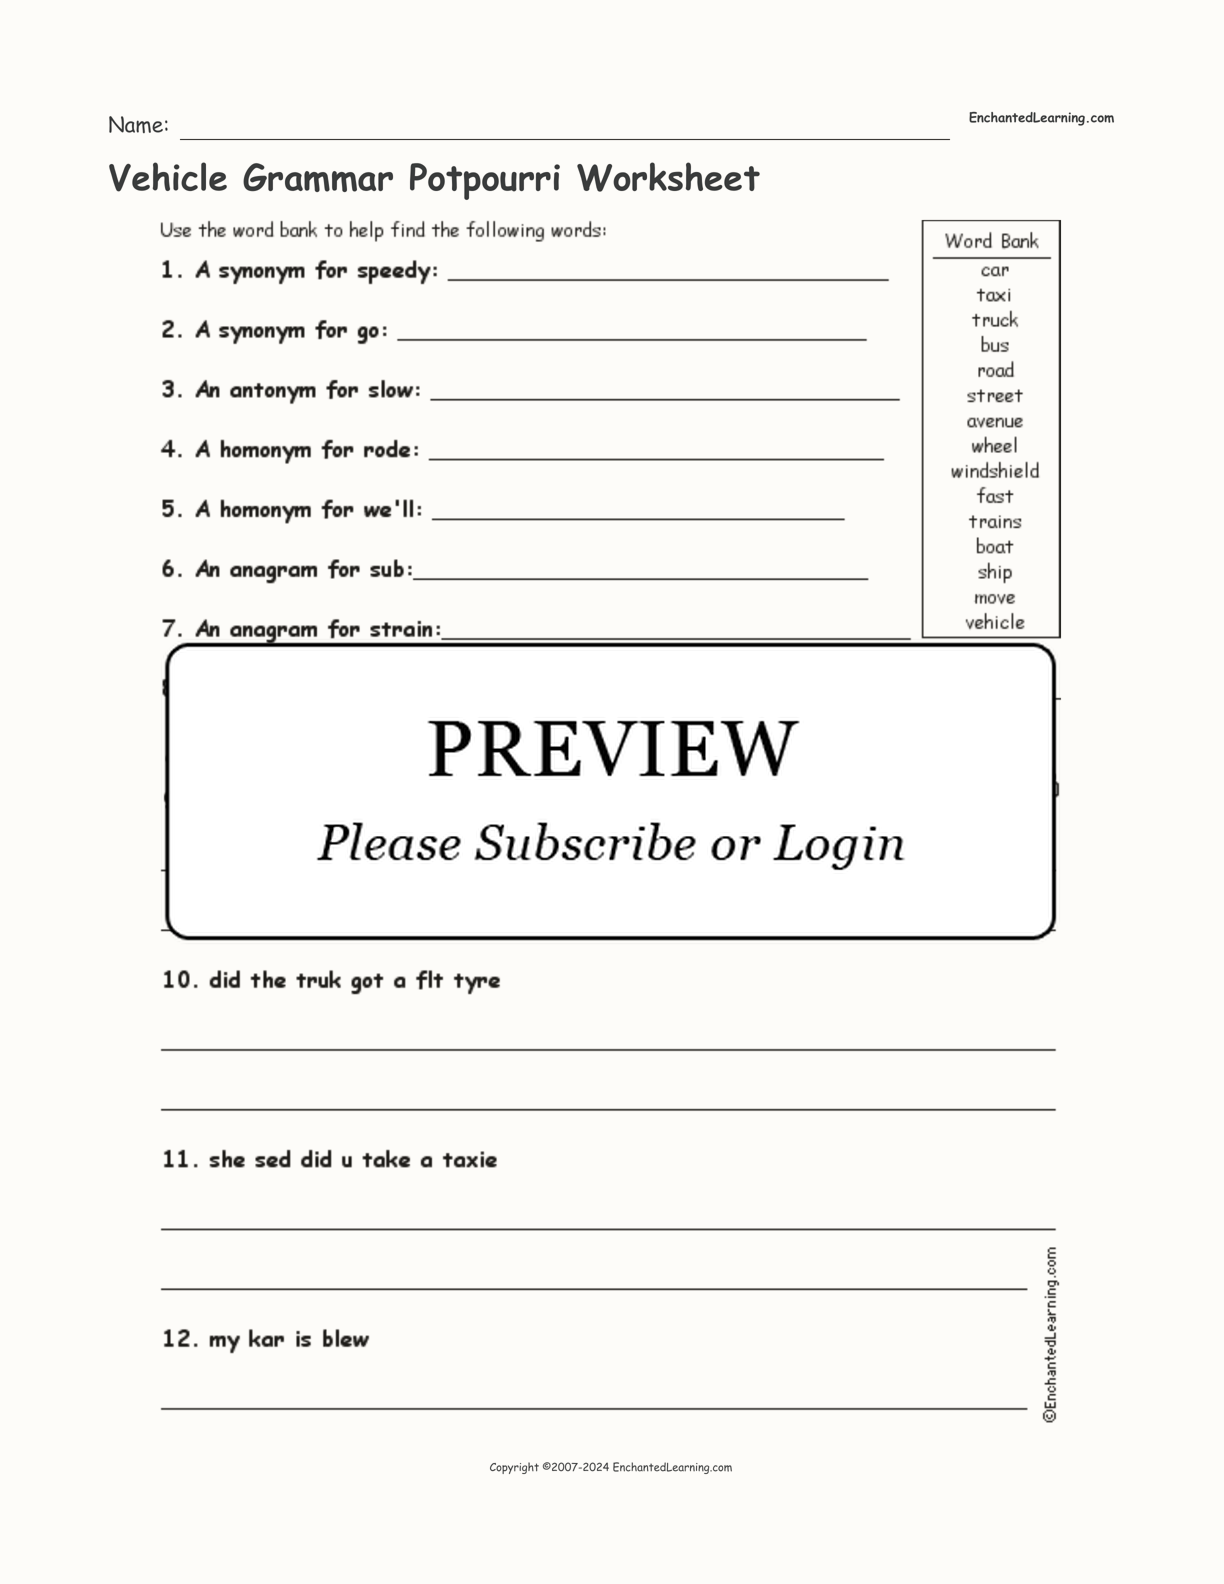 Vehicle Grammar Potpourri Worksheet interactive worksheet page 1